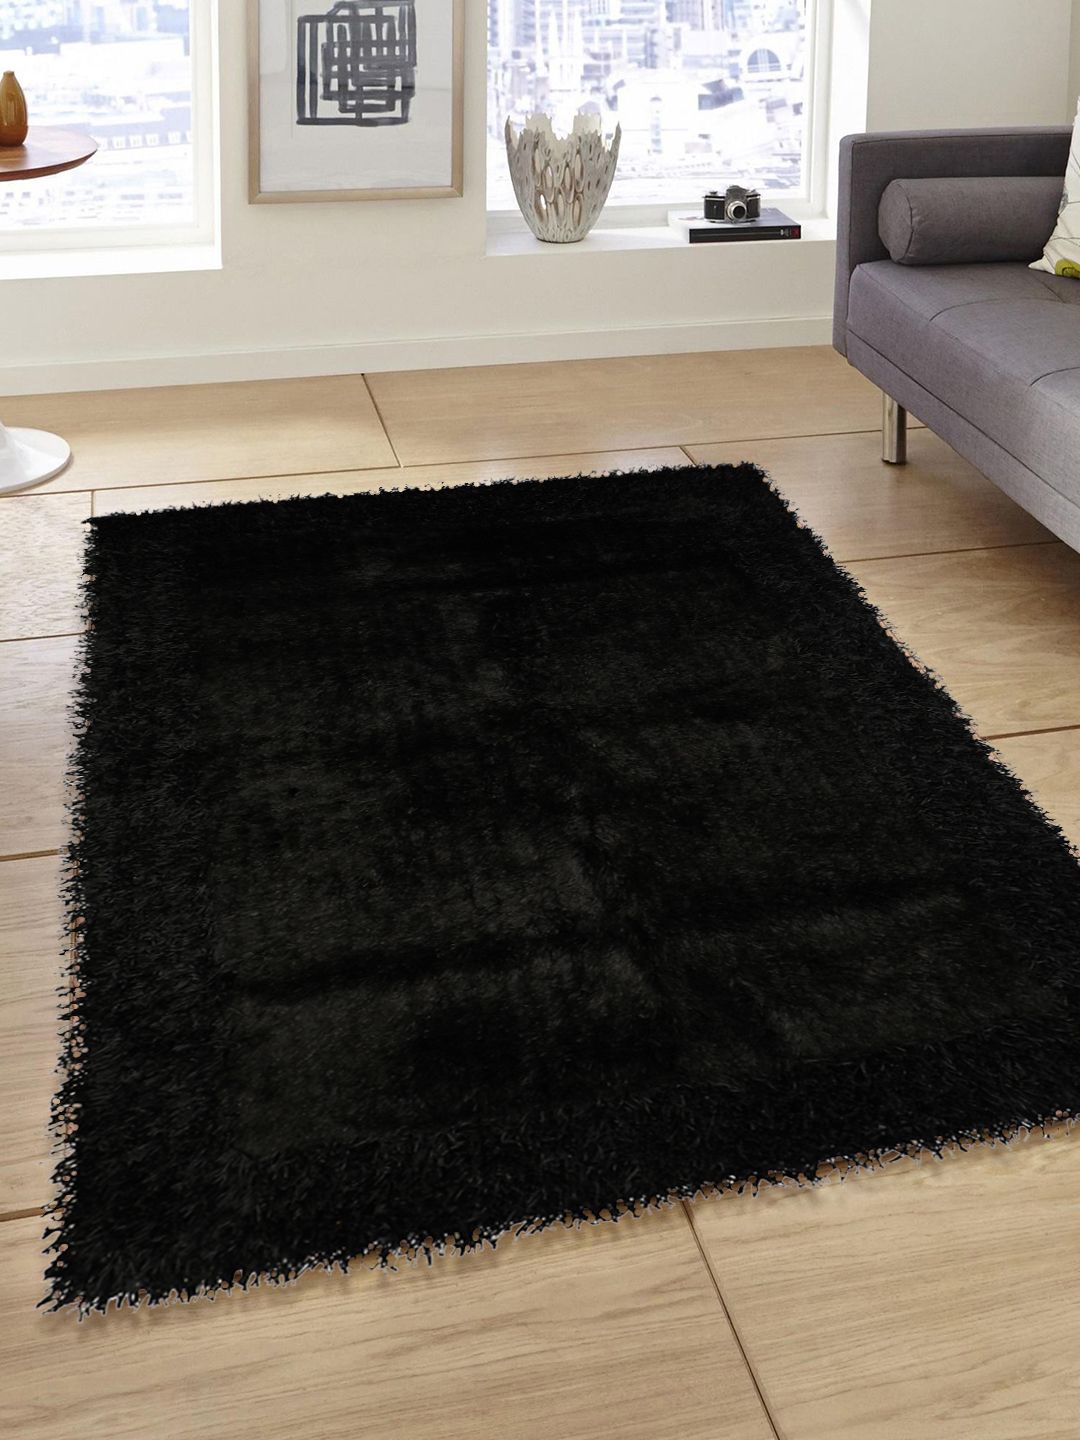 PRESTO Black Solid Anti-Skid Carpet Price in India